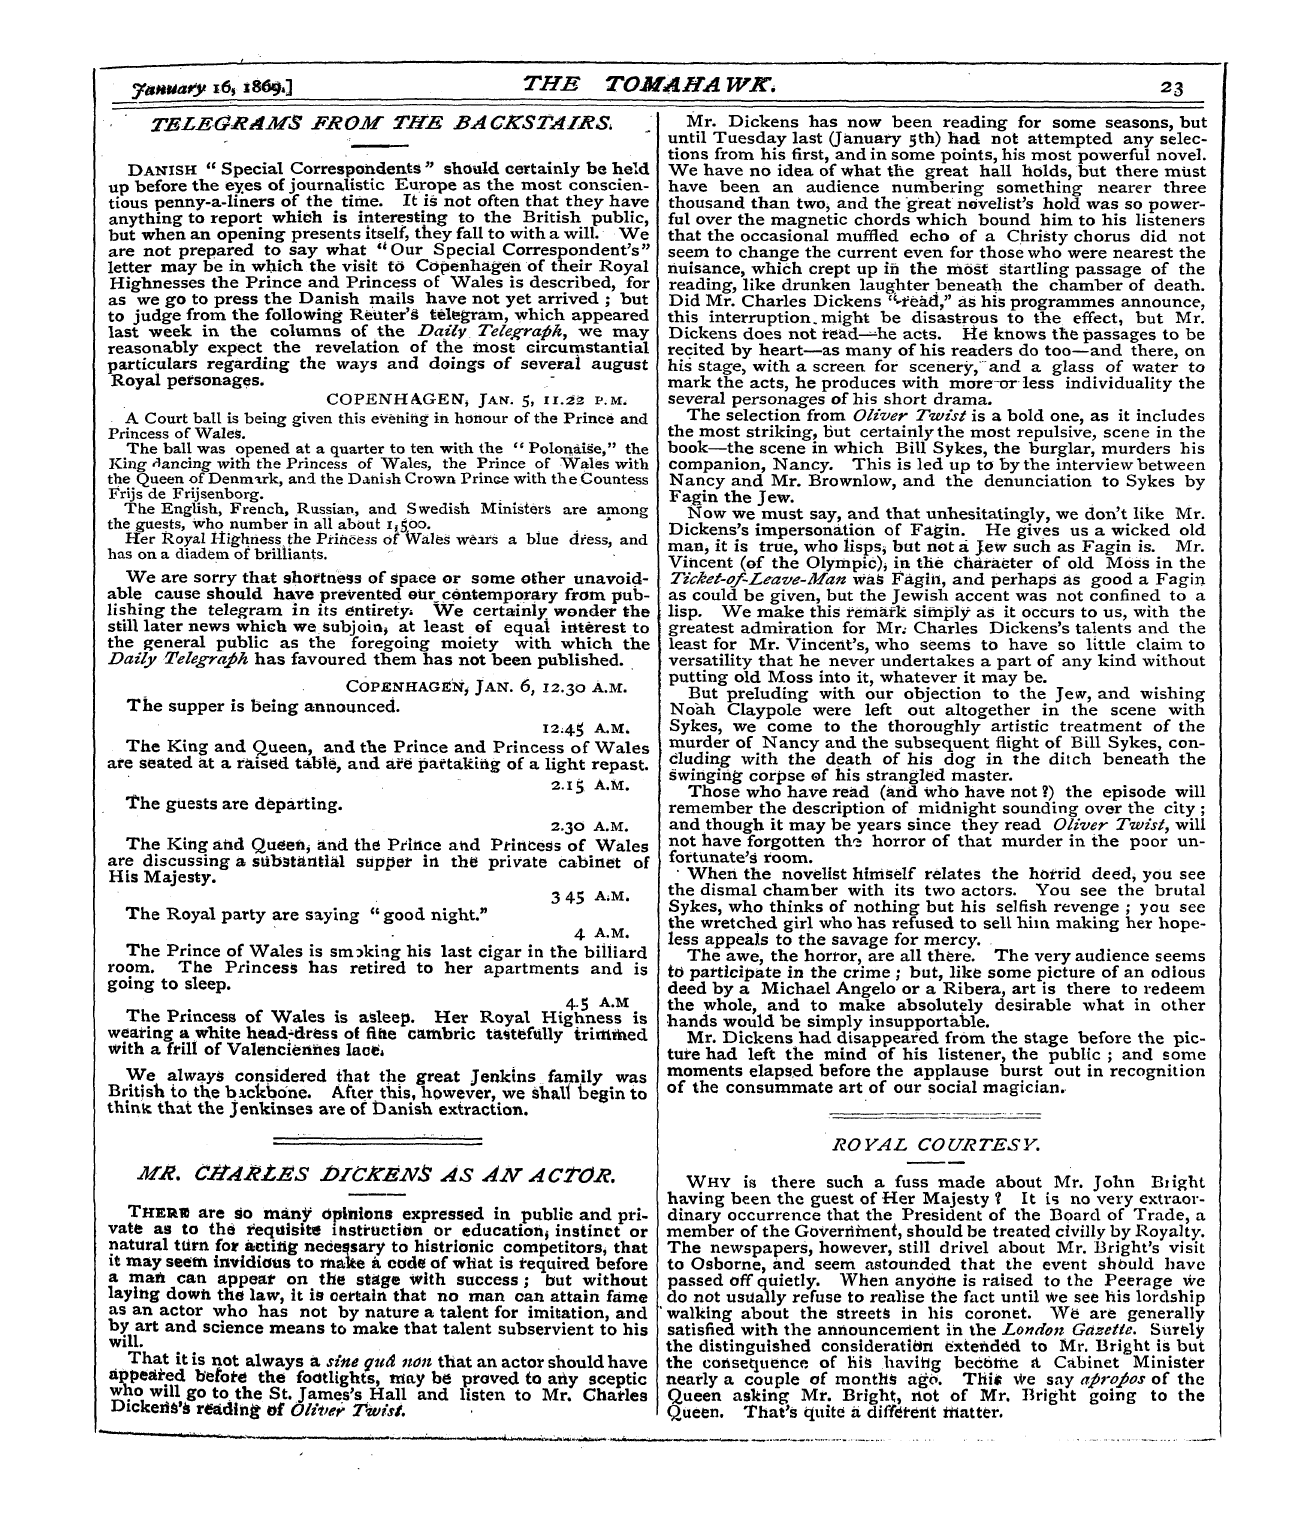 Tomahawk (1867-1870): jS F Y, 1st edition - Wk. January I^ Rt^-\ Tomaha 23